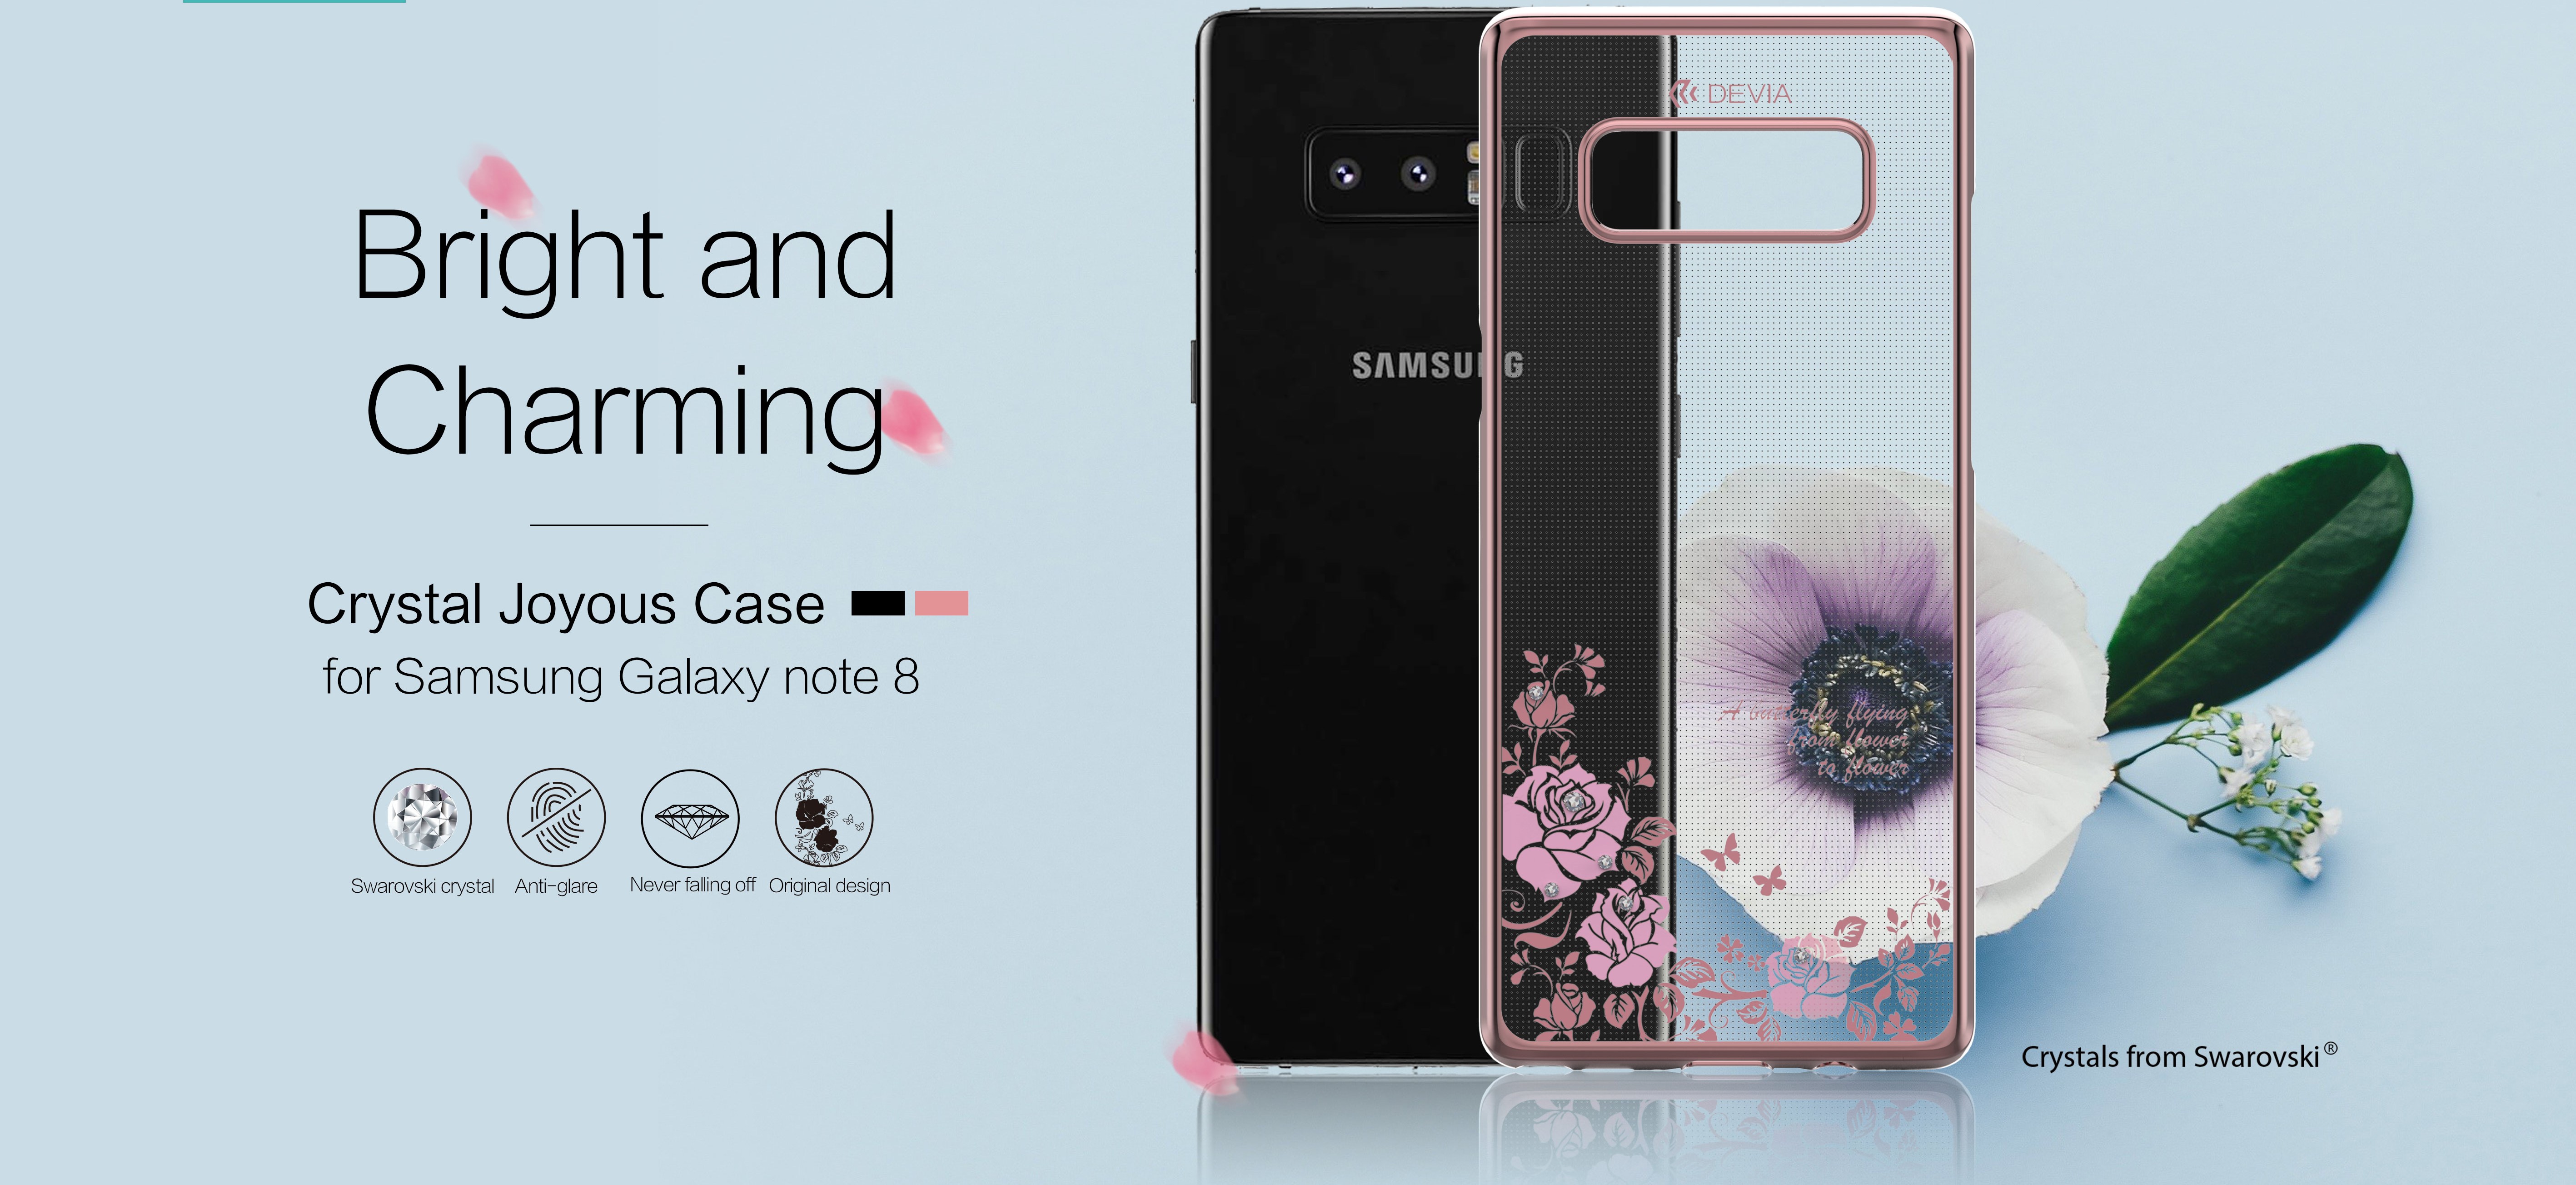 Samsung Galaxy Note 8 Crystal Joyous Case